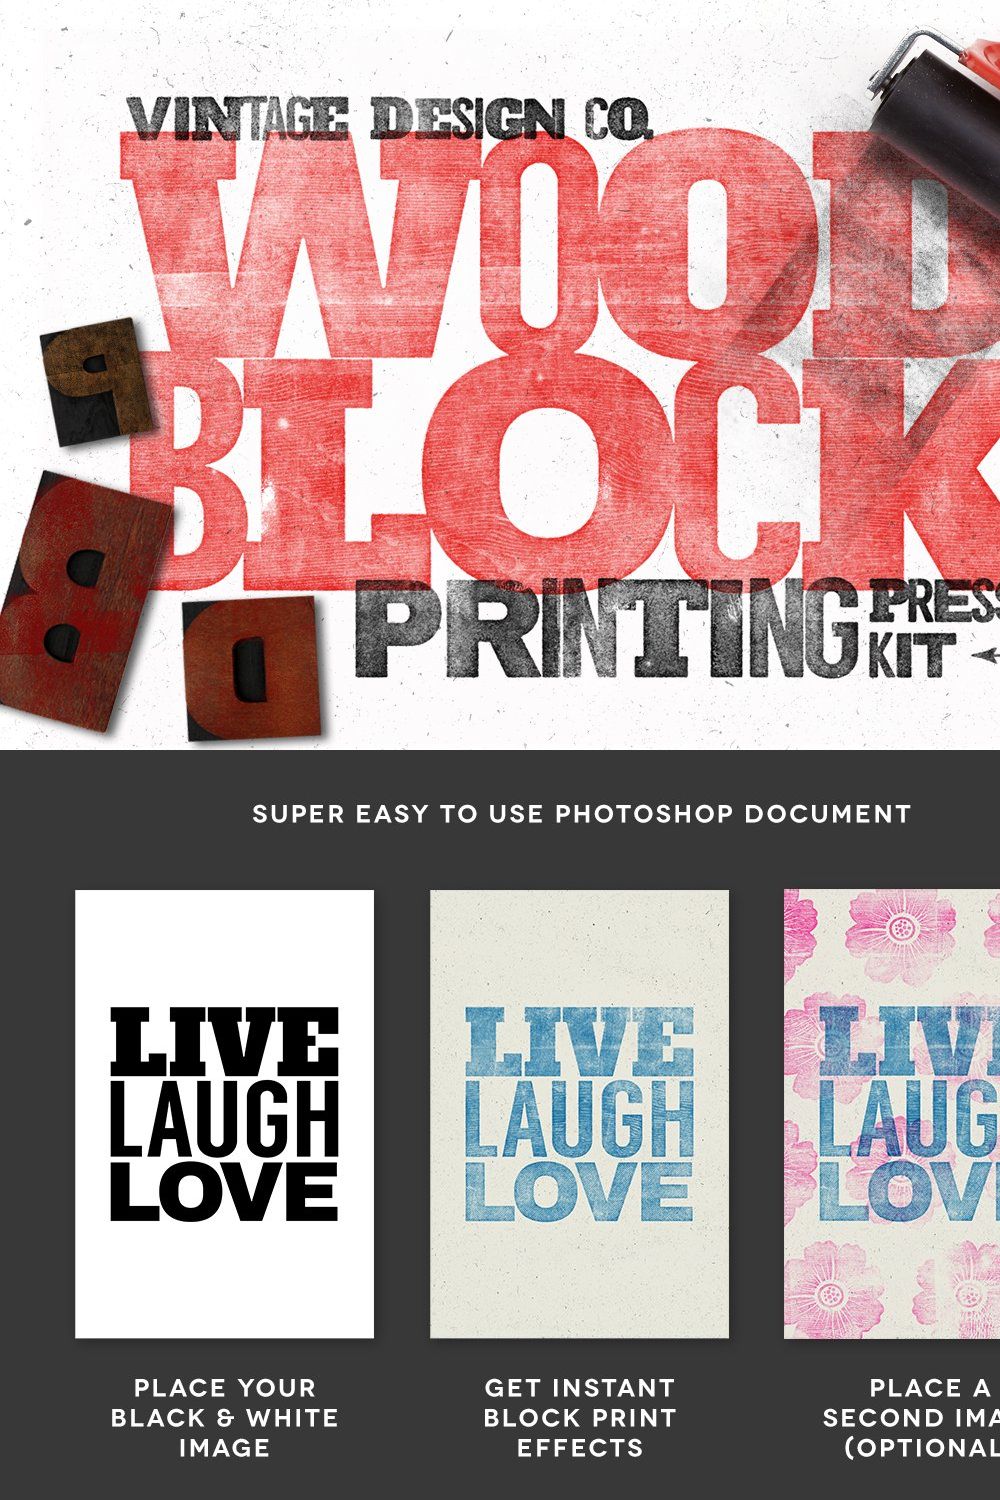 WoodBlock Printing Press Kit pinterest preview image.